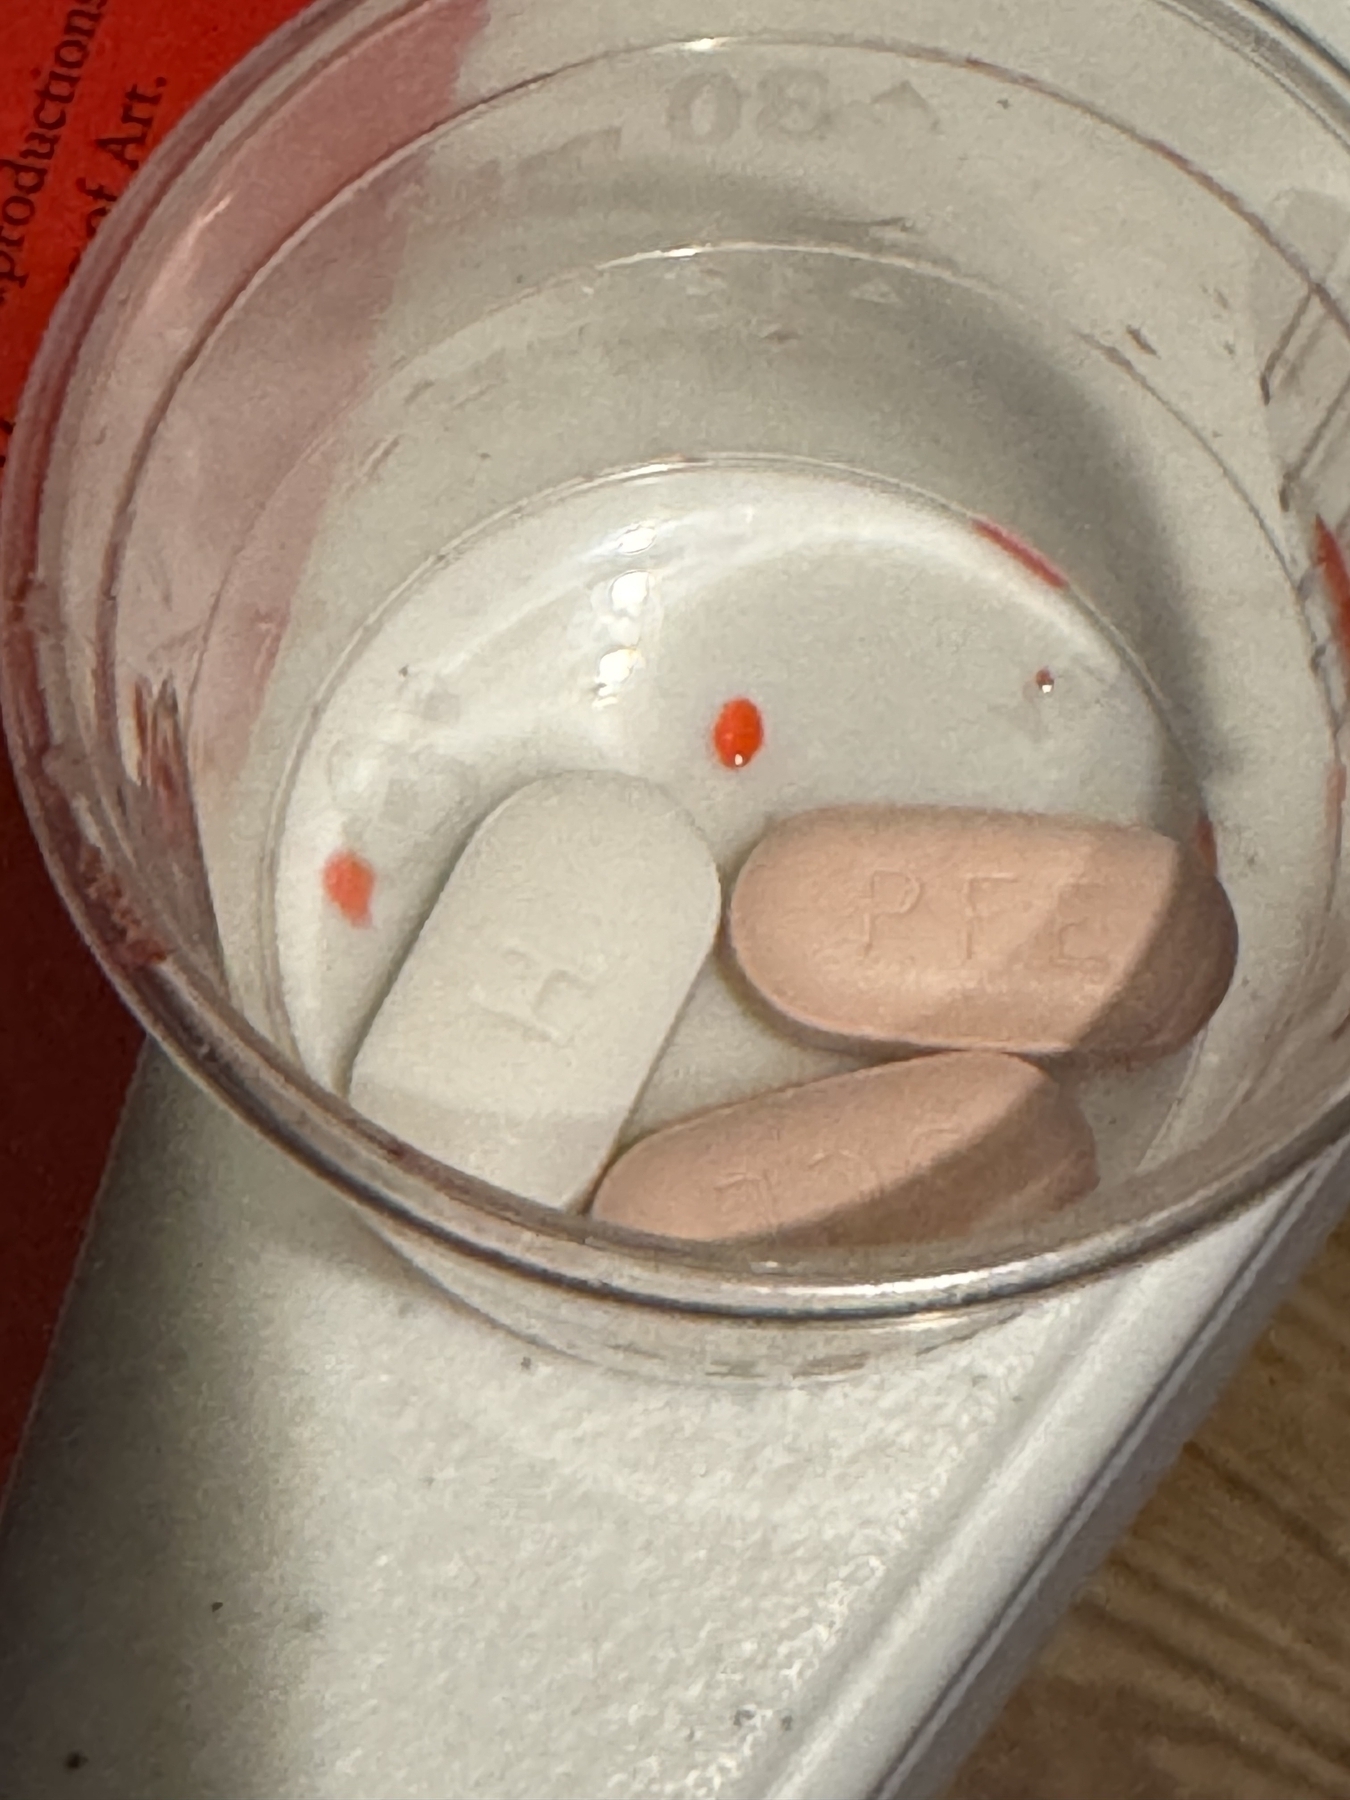 Prescription medicine tablets in a plastic cup.